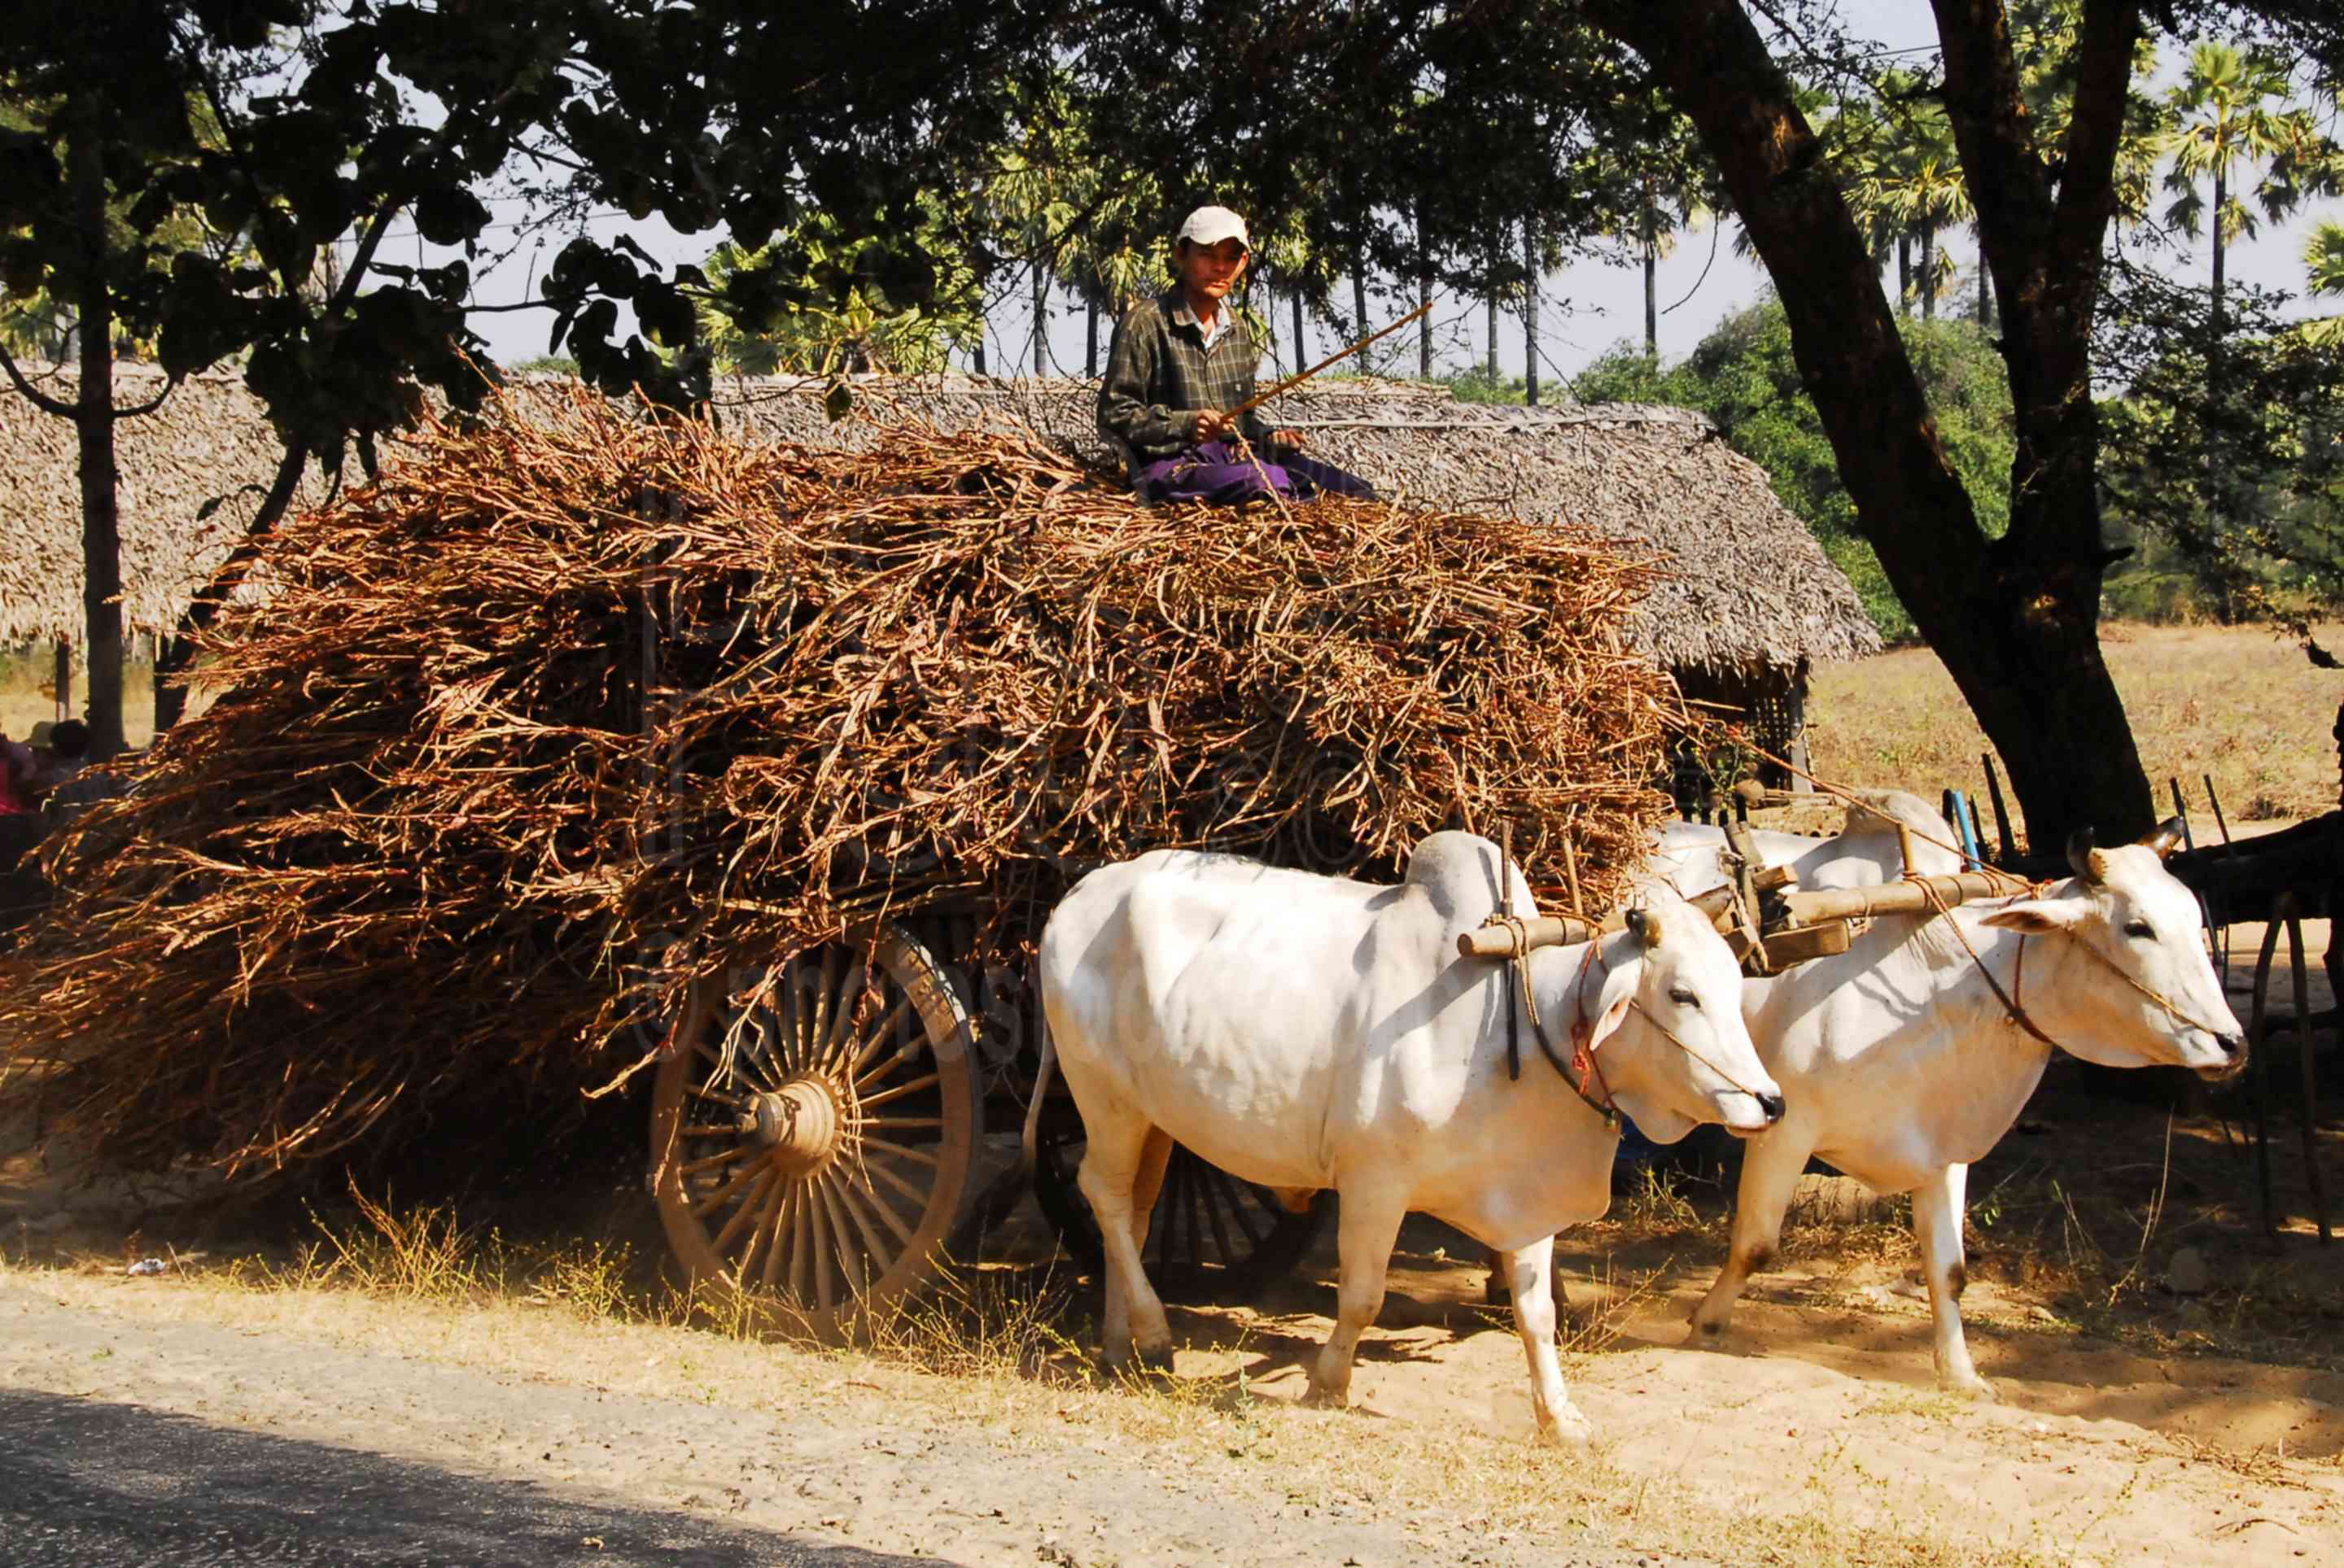 Ox Cart of Filrewood,myanmar,man,working,firewood,hauling,cart,wagon,ox cart,brahma bulls,zebu,white,humped,bos primigenius indicus